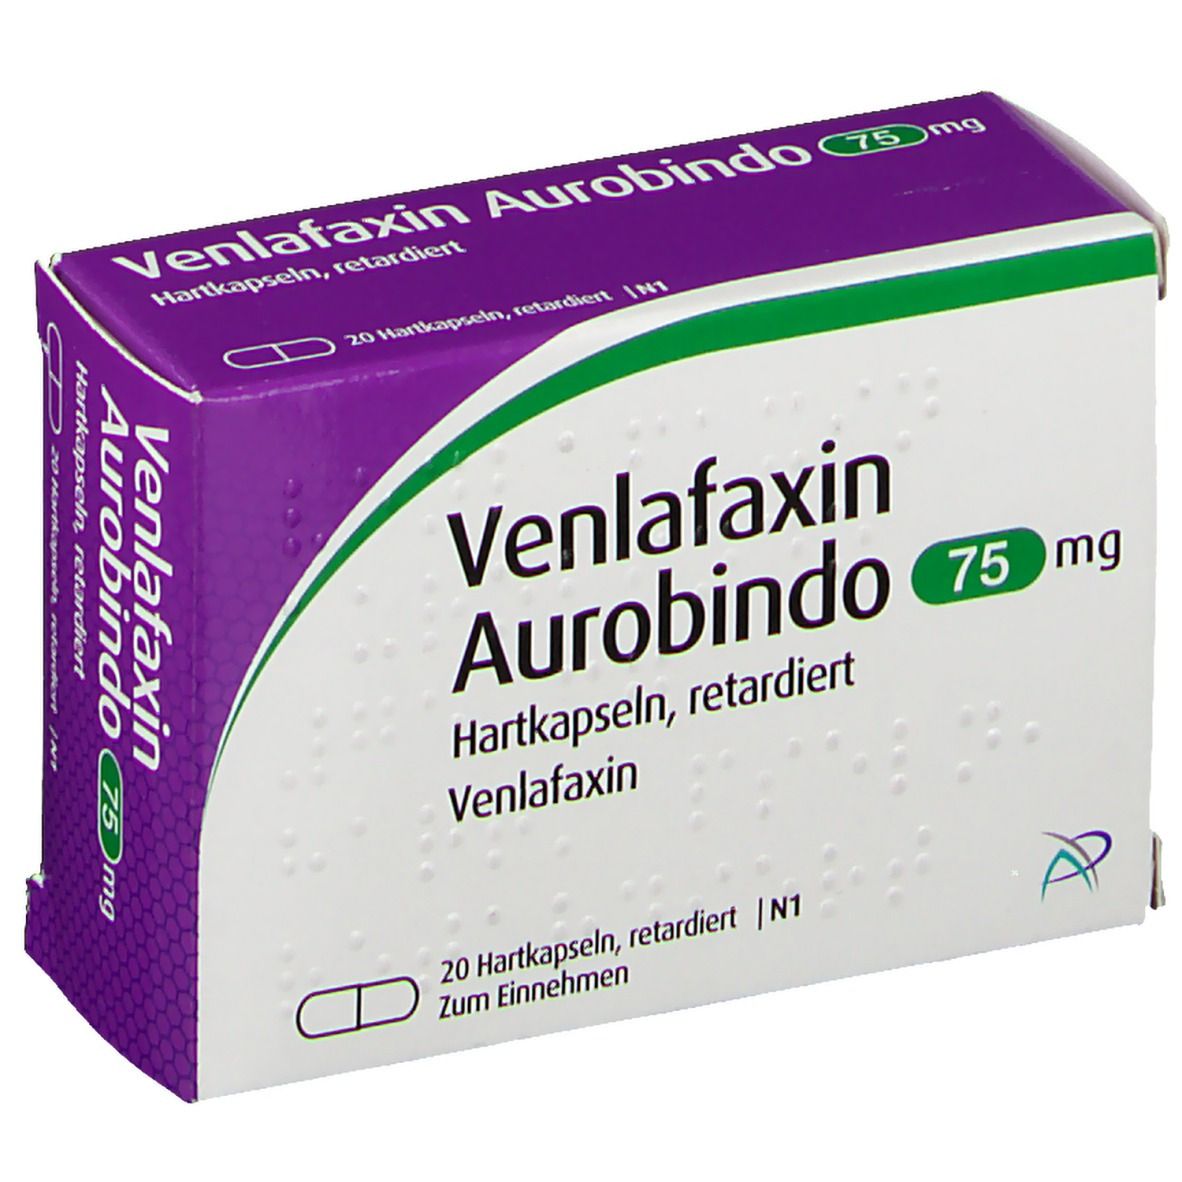 Venlafaxin Aurobindo 75 mg